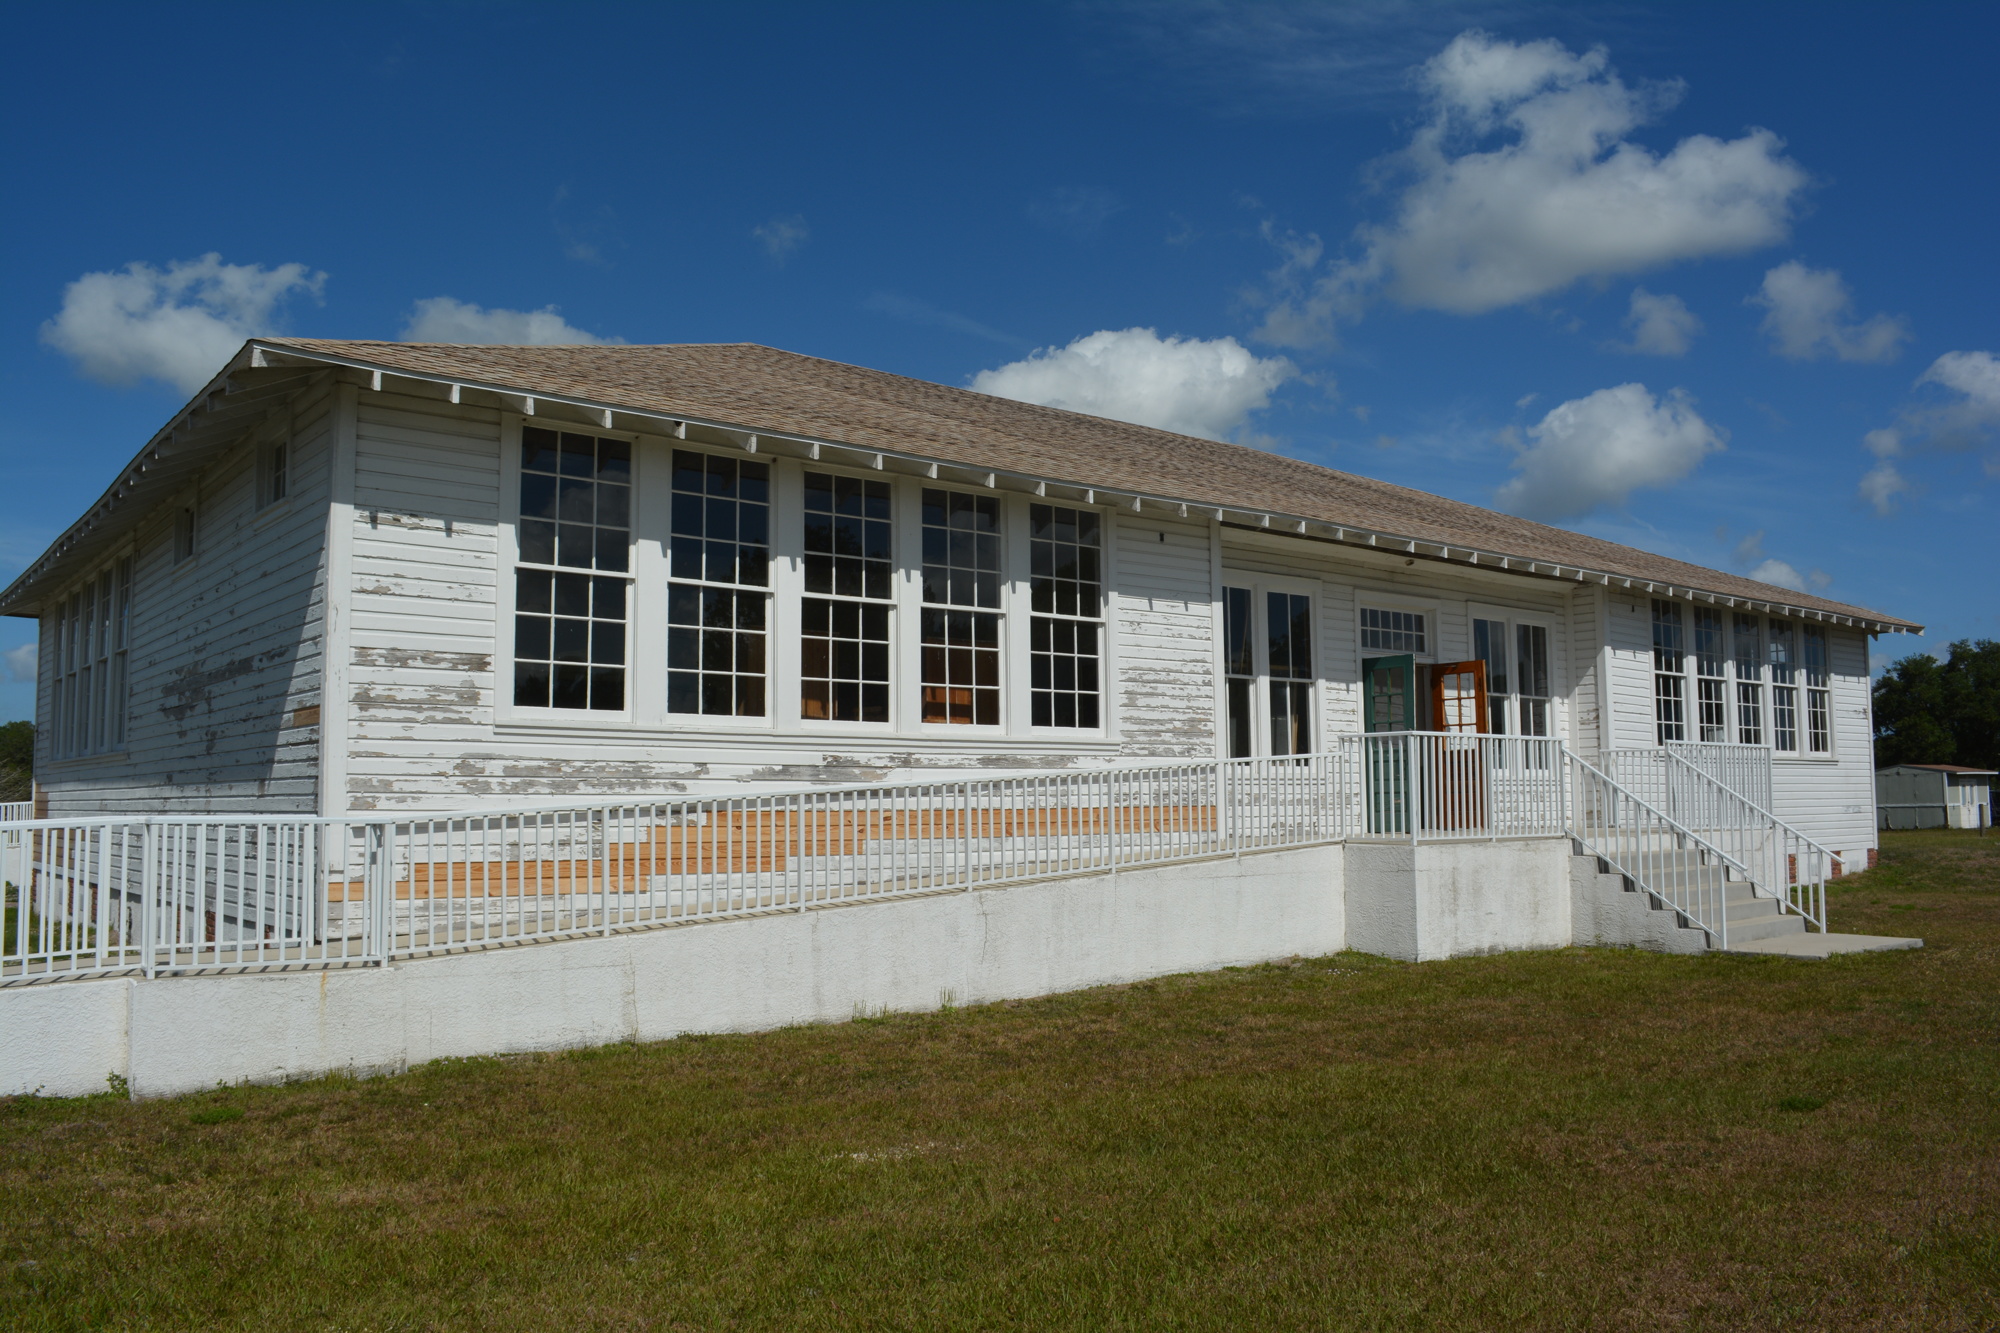 The Myakka City School House was opened in 1914.